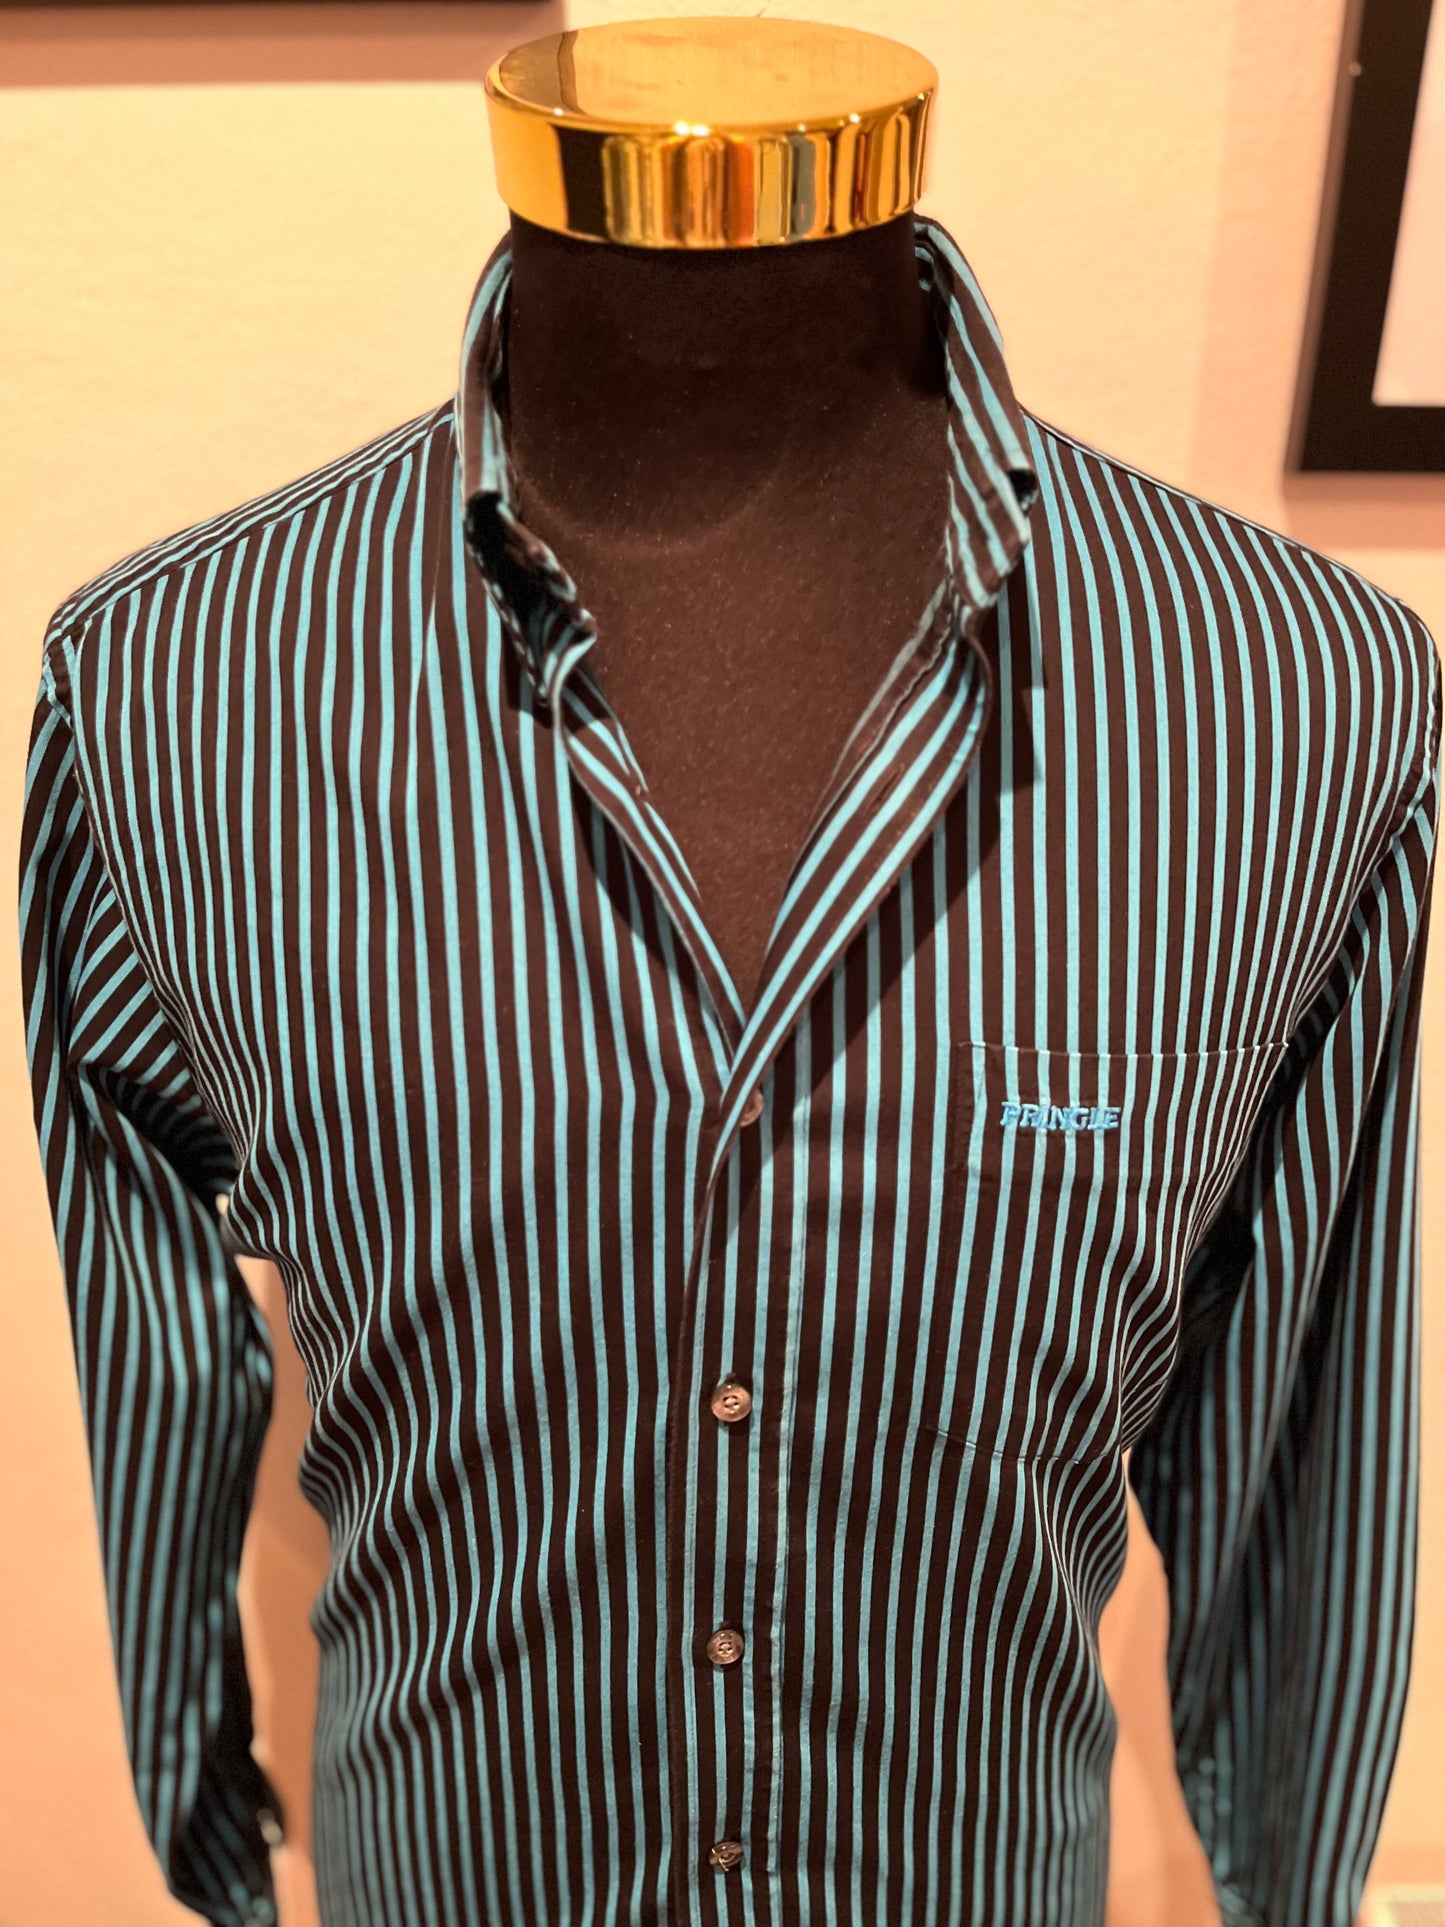 Pringle of Scotland 100% Blue Black Stripe Cotton Shirt Size Large Button Down Collar